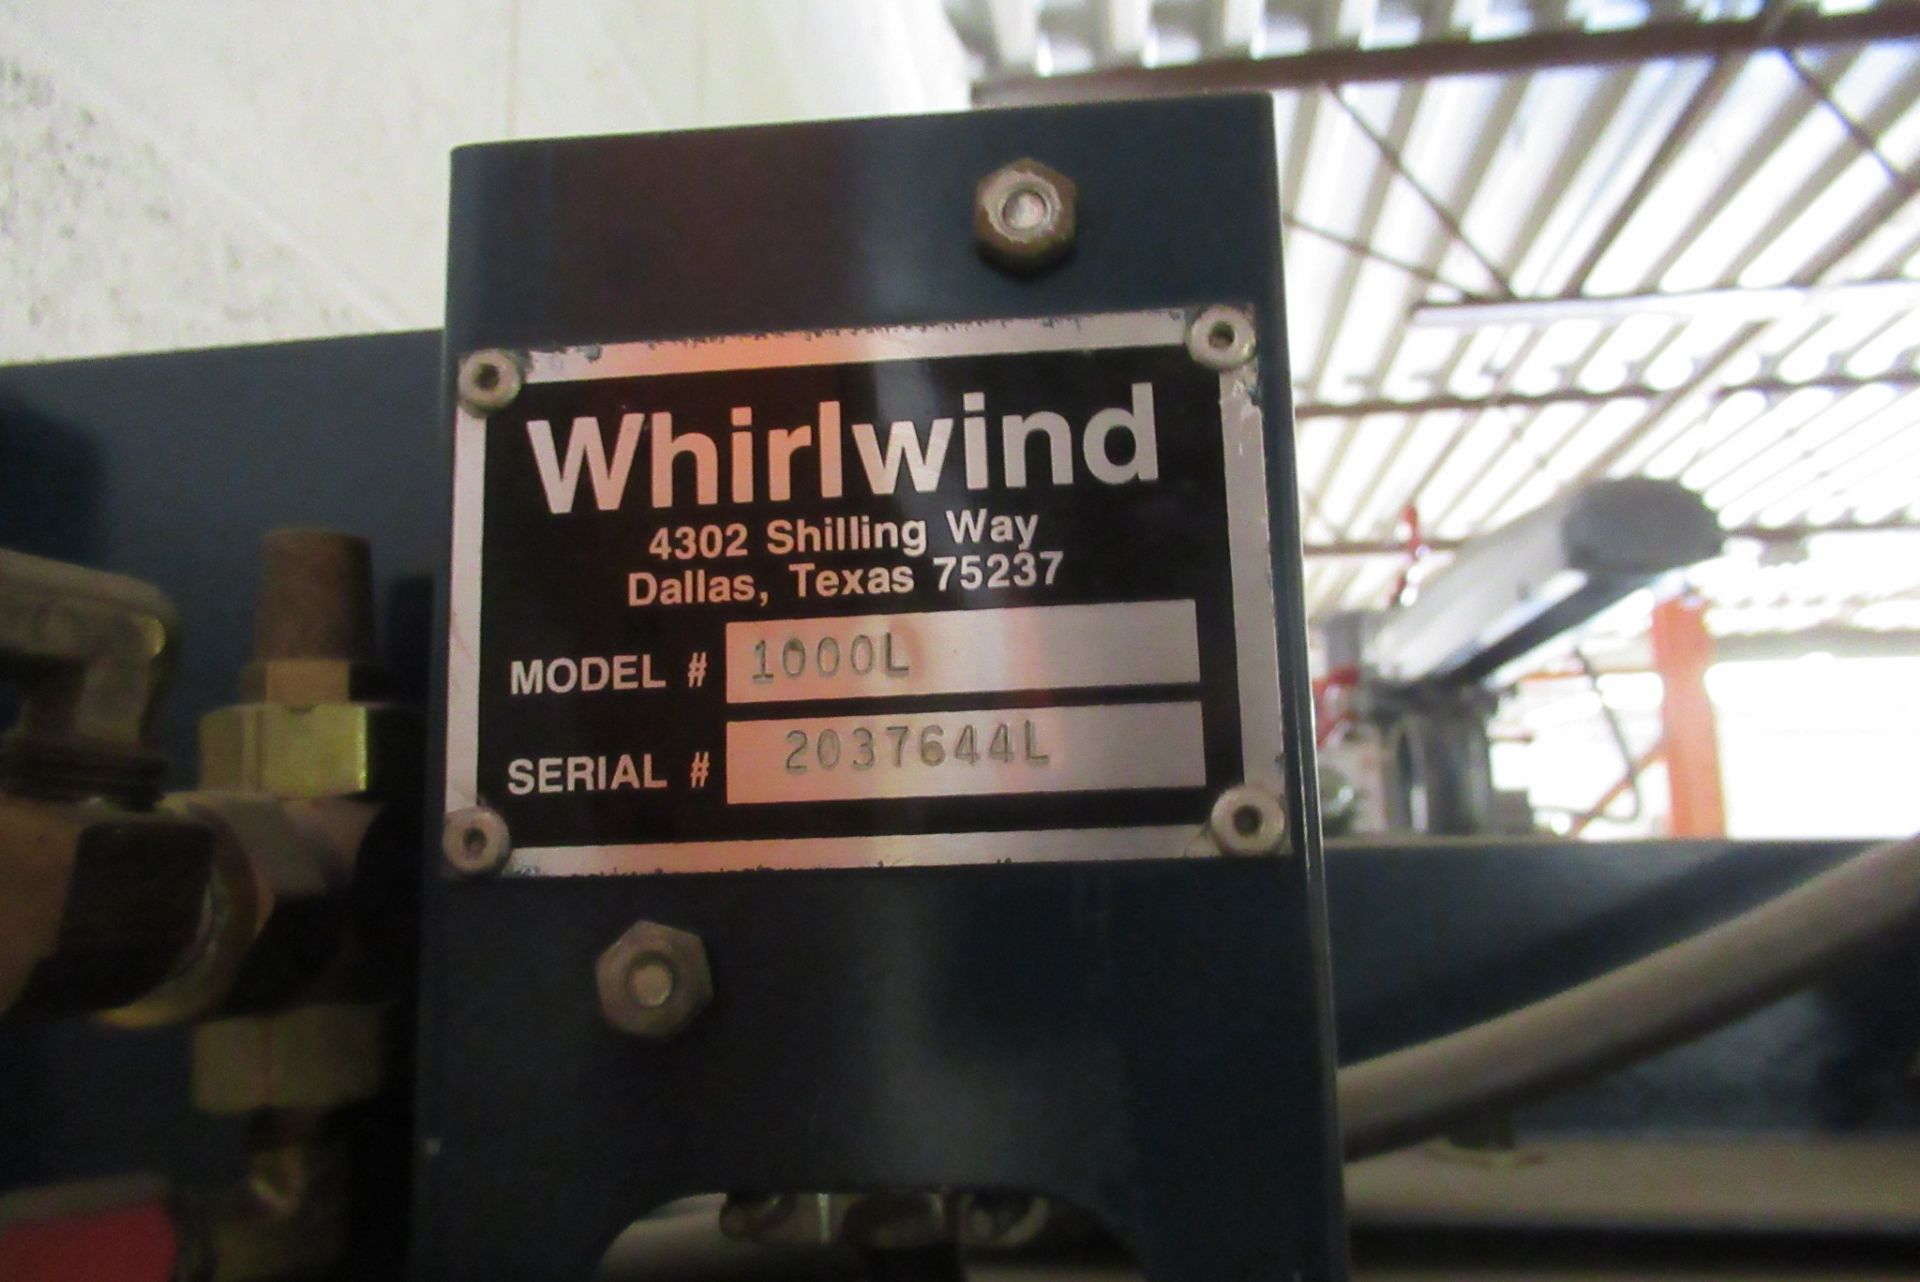 Whirlwind Automatic Upper Cut Saw, m/n 1000L, s/n 2037644L - Image 5 of 5